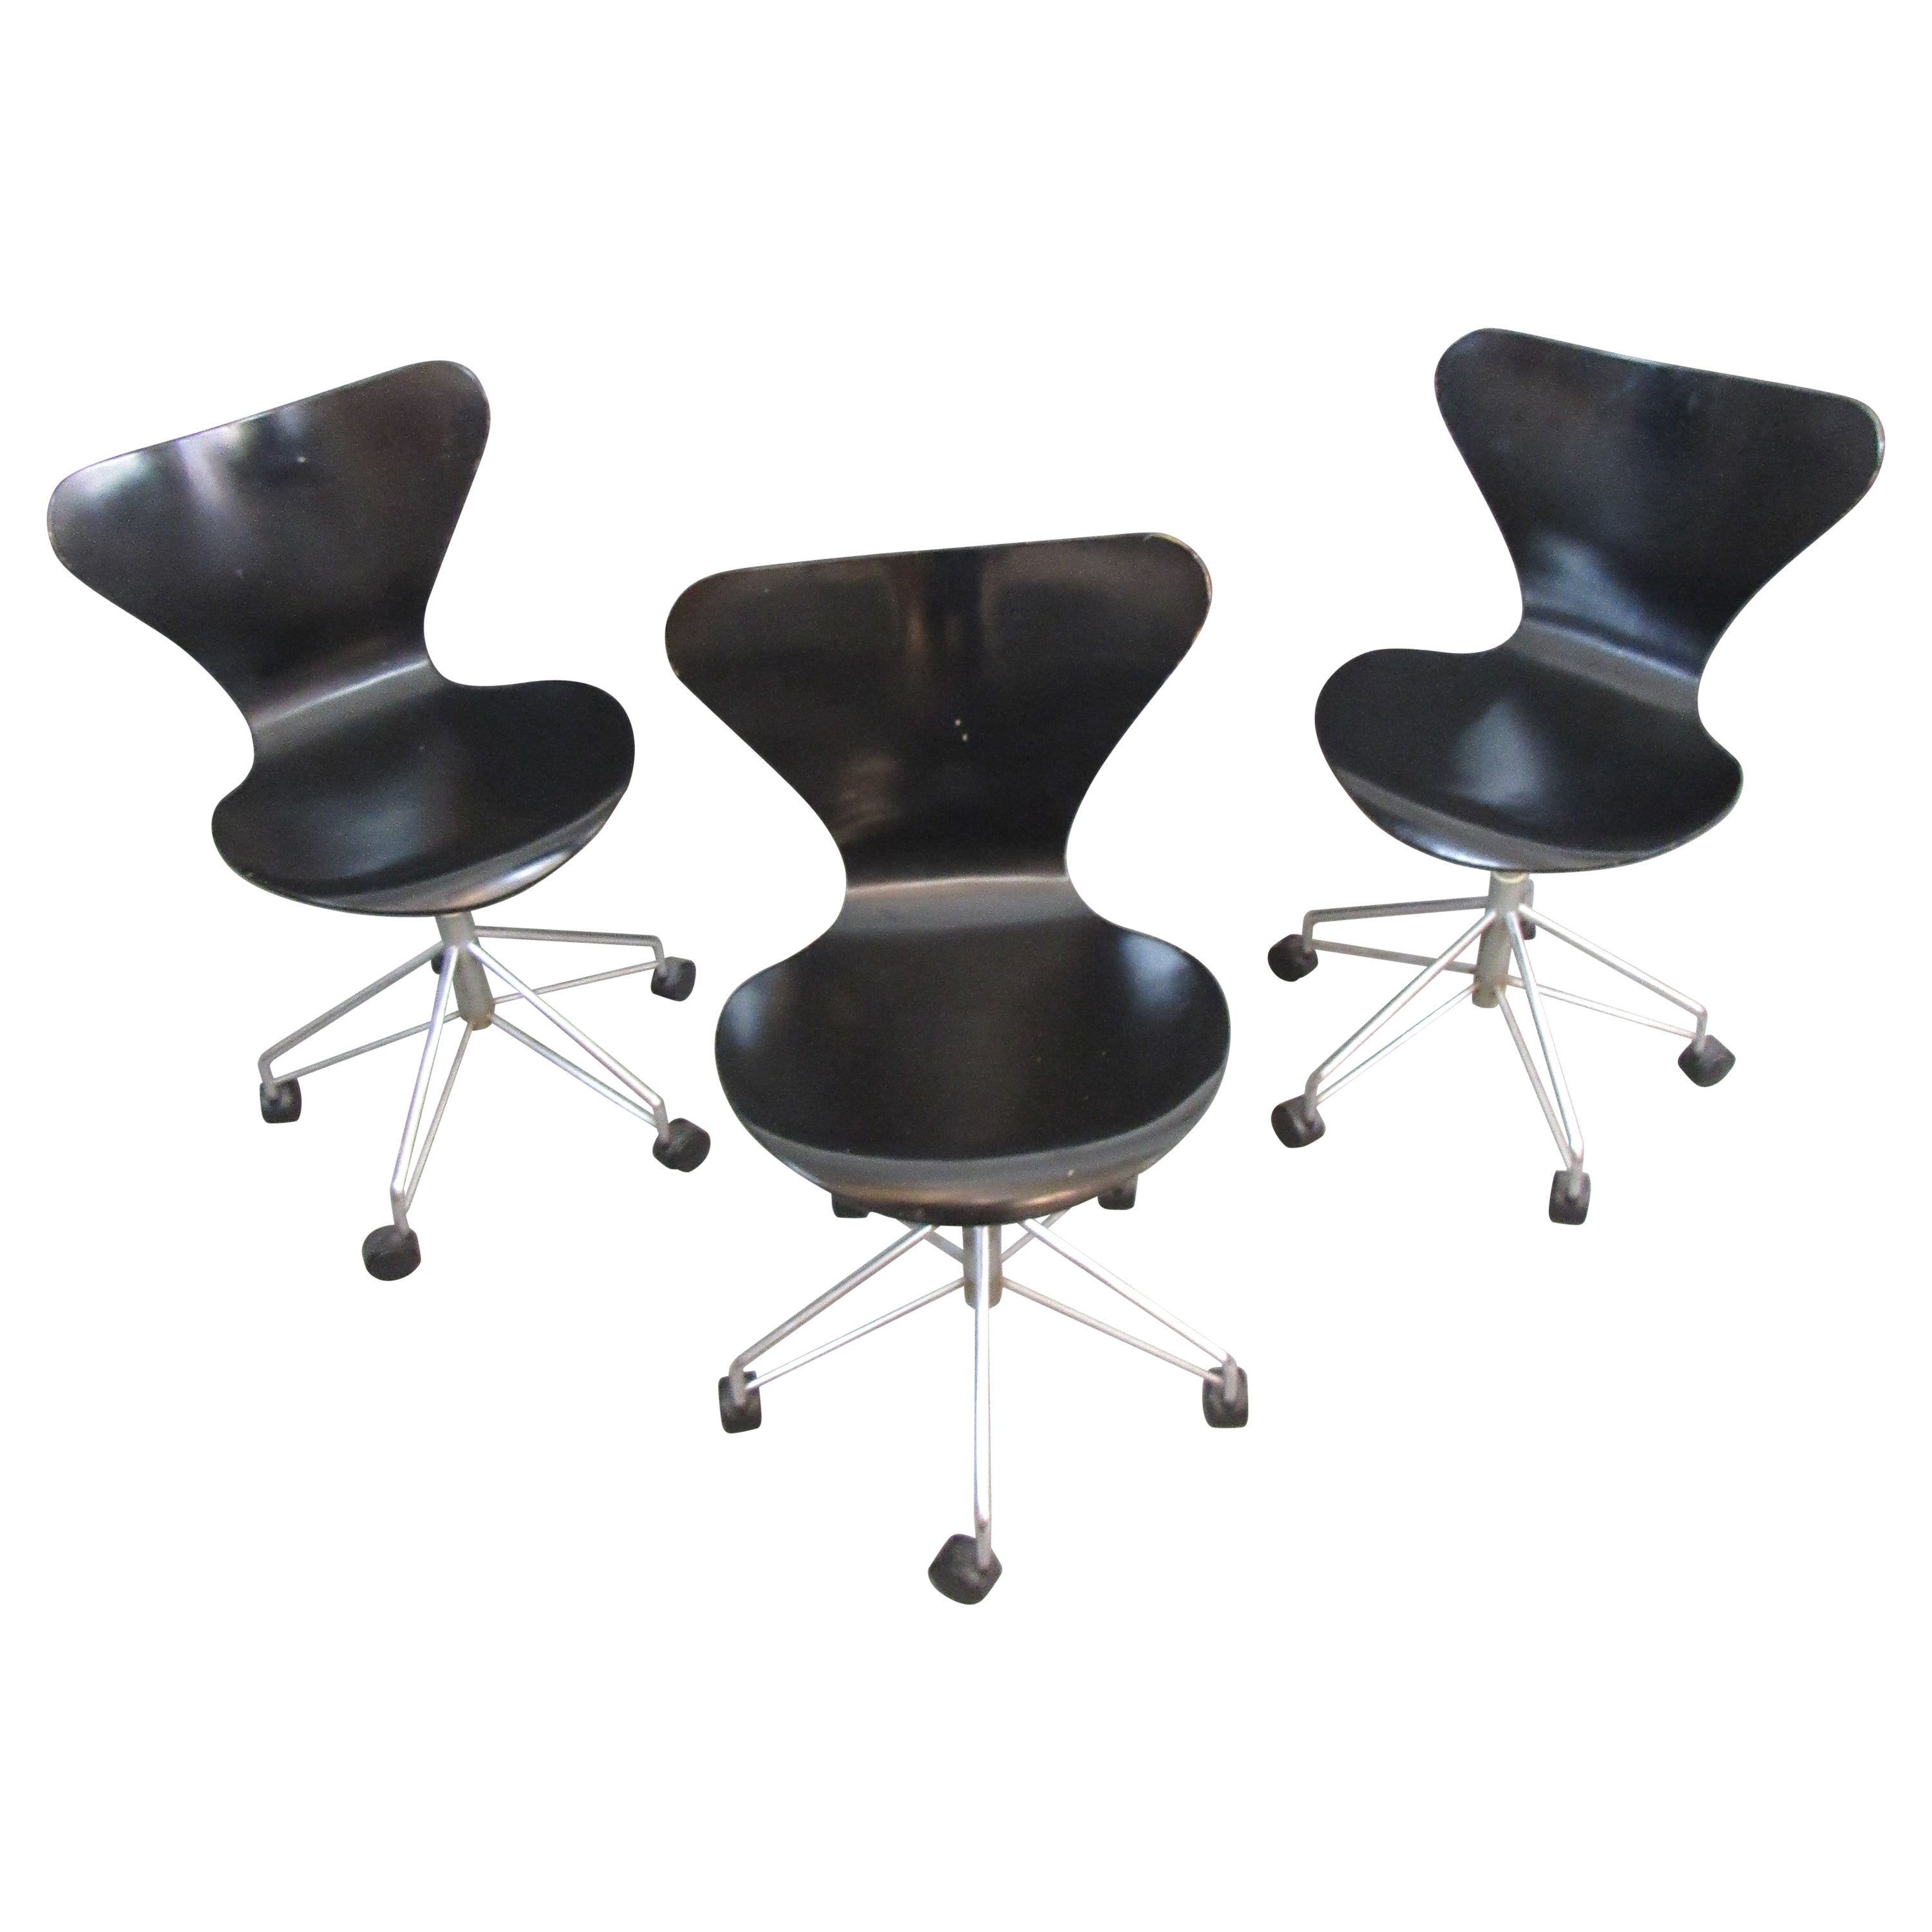 3 Arne Jacobsen "Series 7" Desk Chairs by Fritz Hansen For Sale